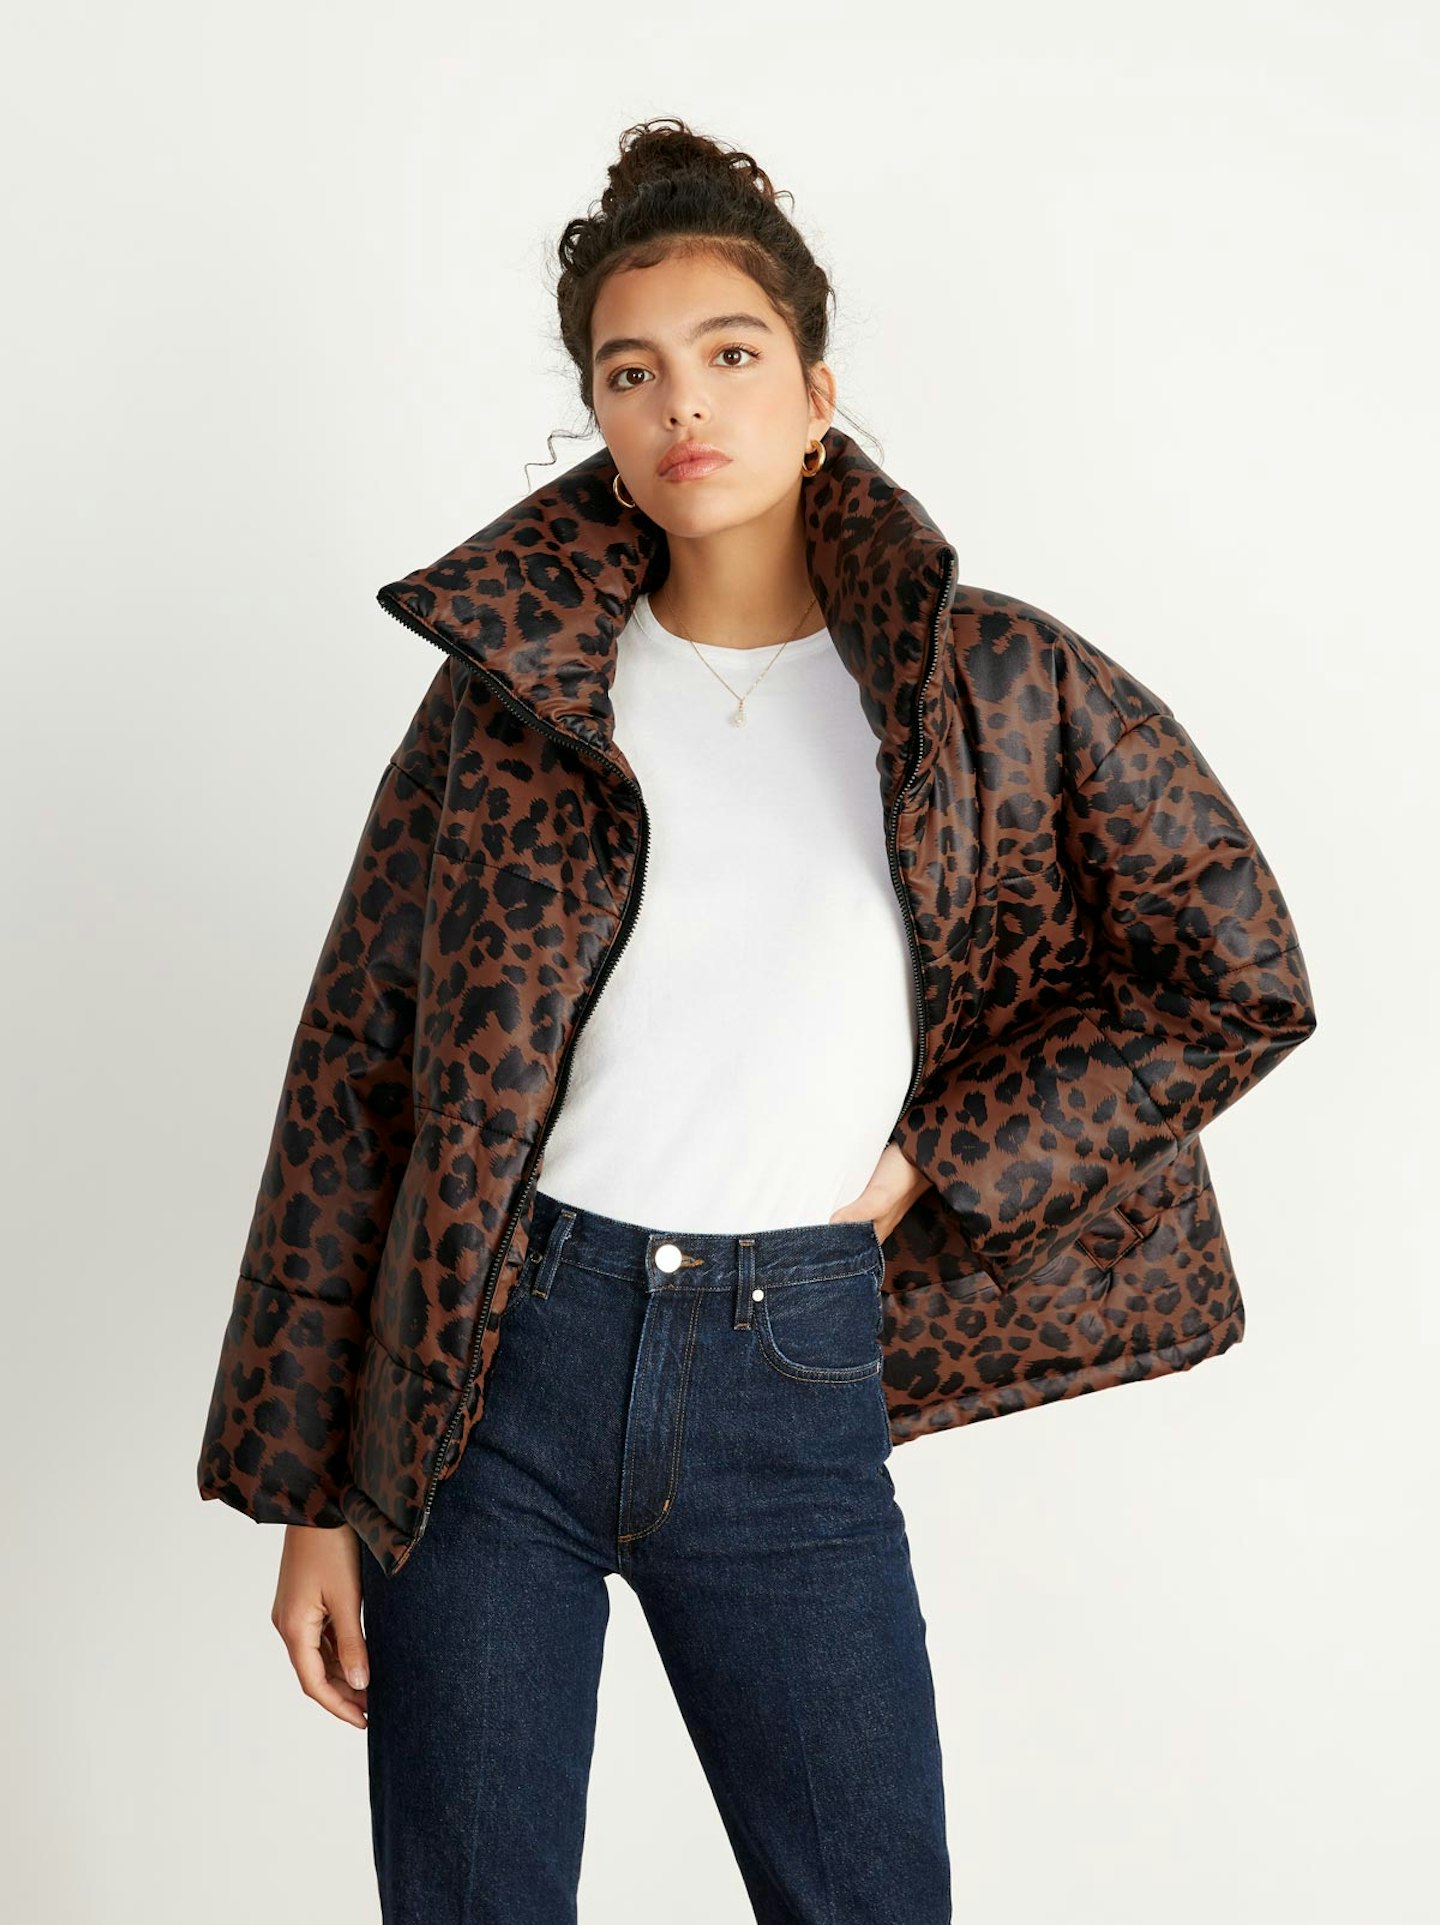 Leopard Print Puffer Jacket, £195